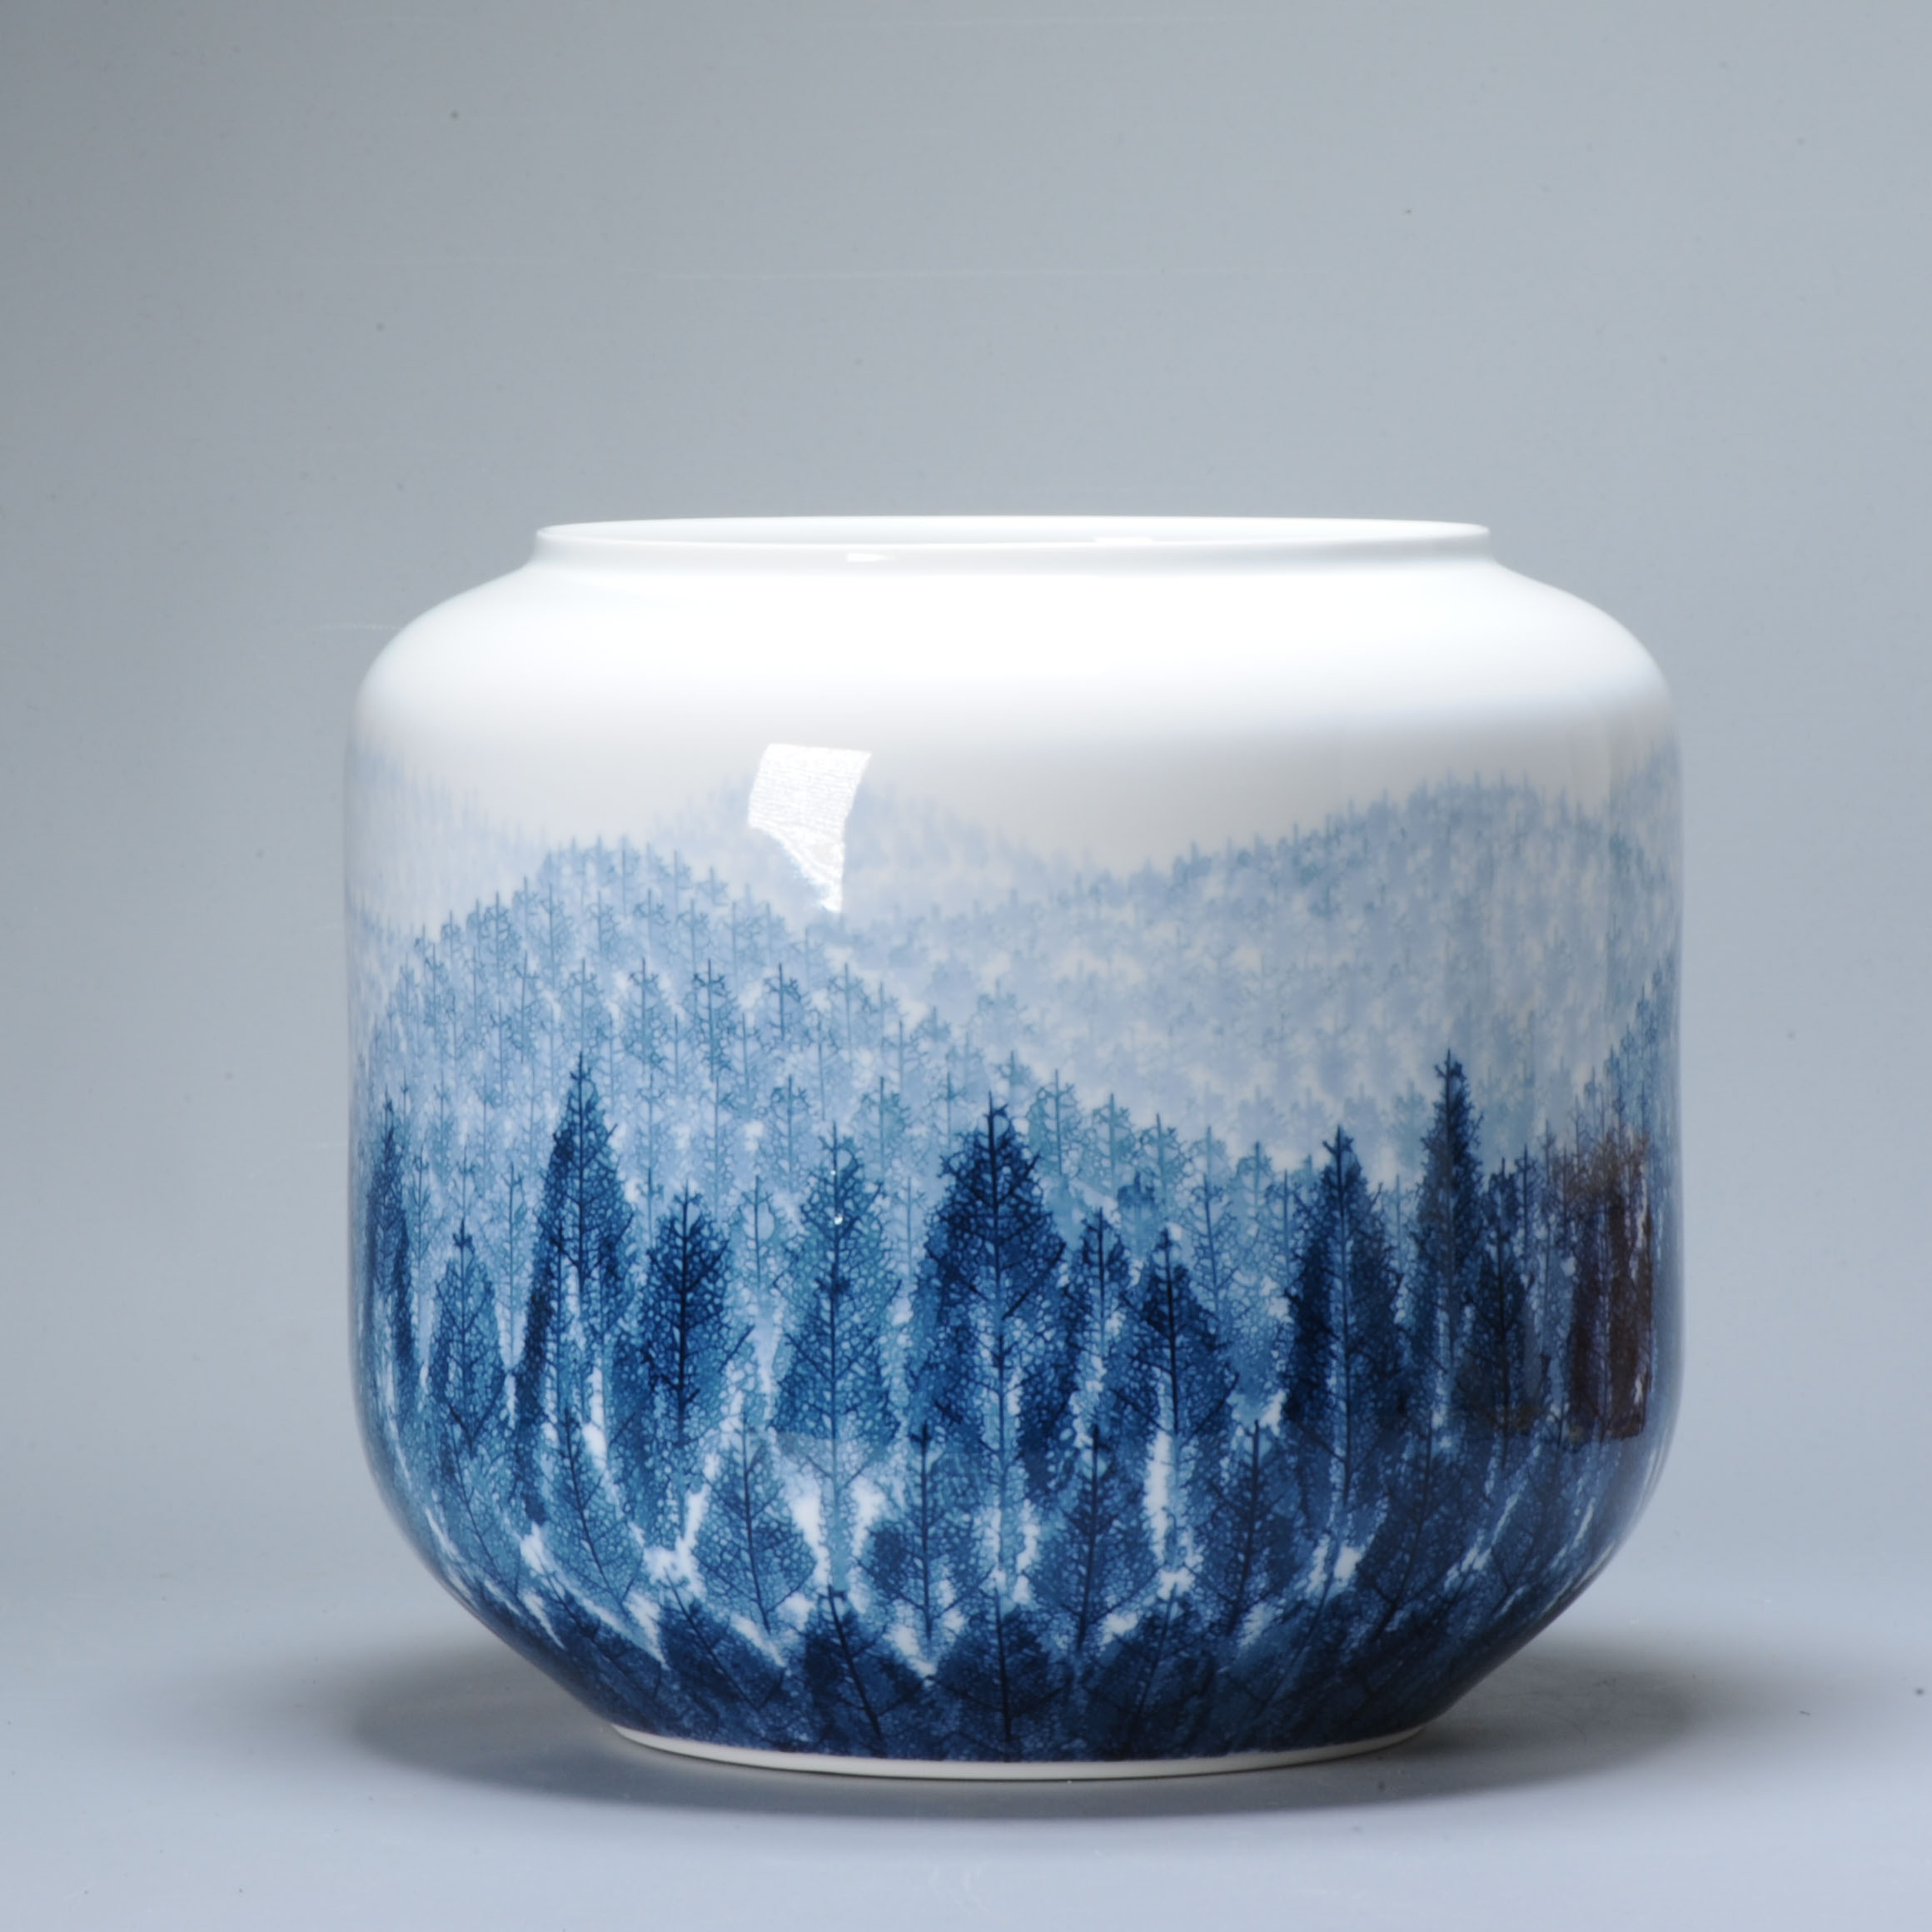 Fine Art Japanese Vase Arita. Artist Fujii Shumei Winter Landscape Born. 1936